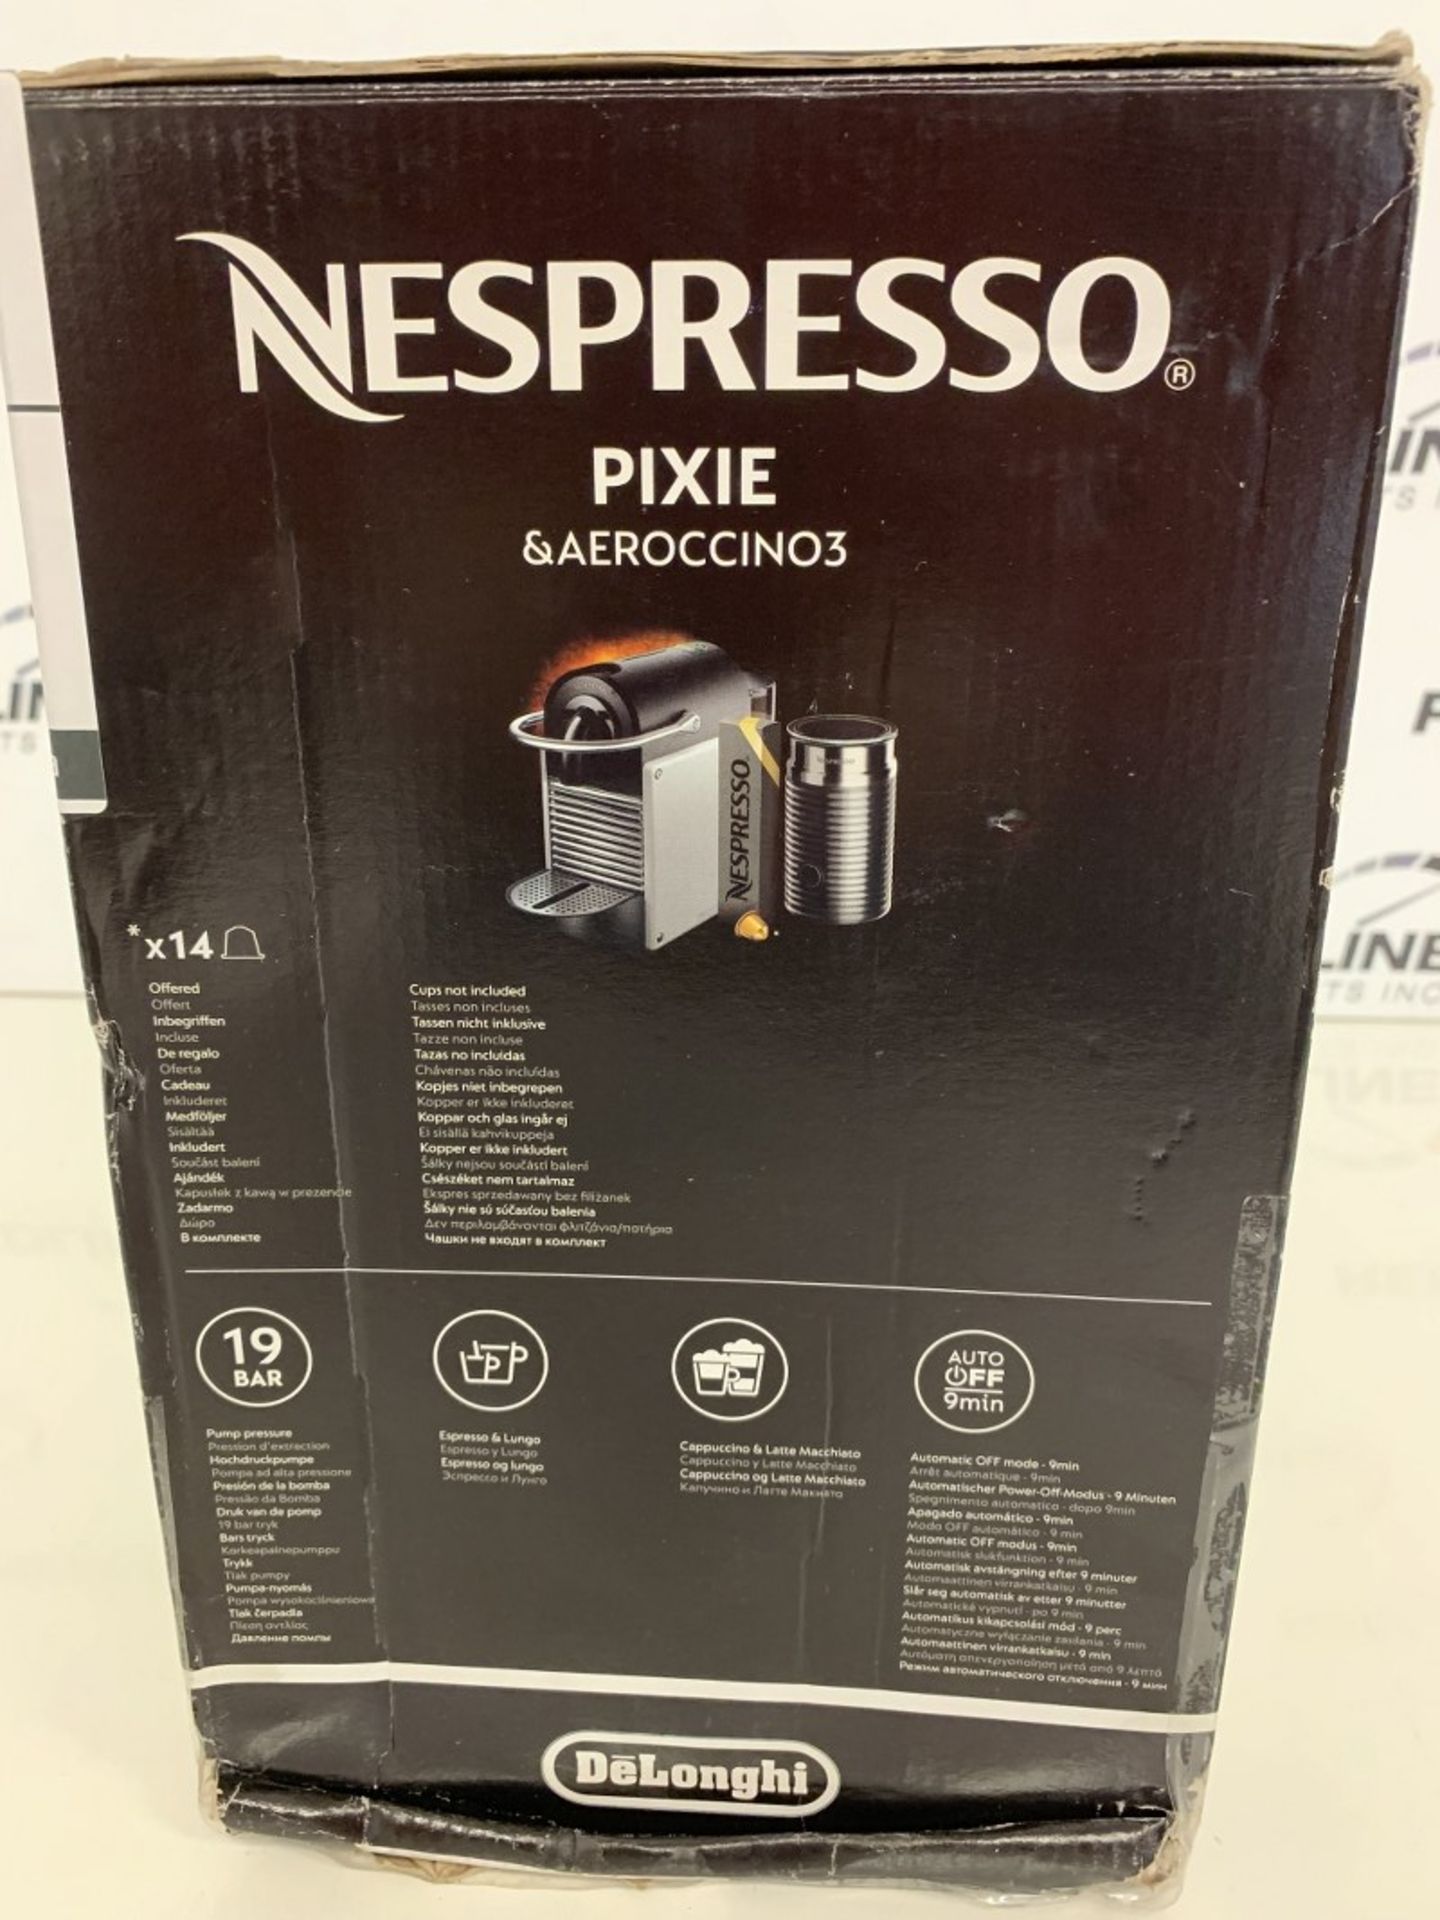 Delonghi - Nespresso - Pixie - Coffee Machine - Image 3 of 3